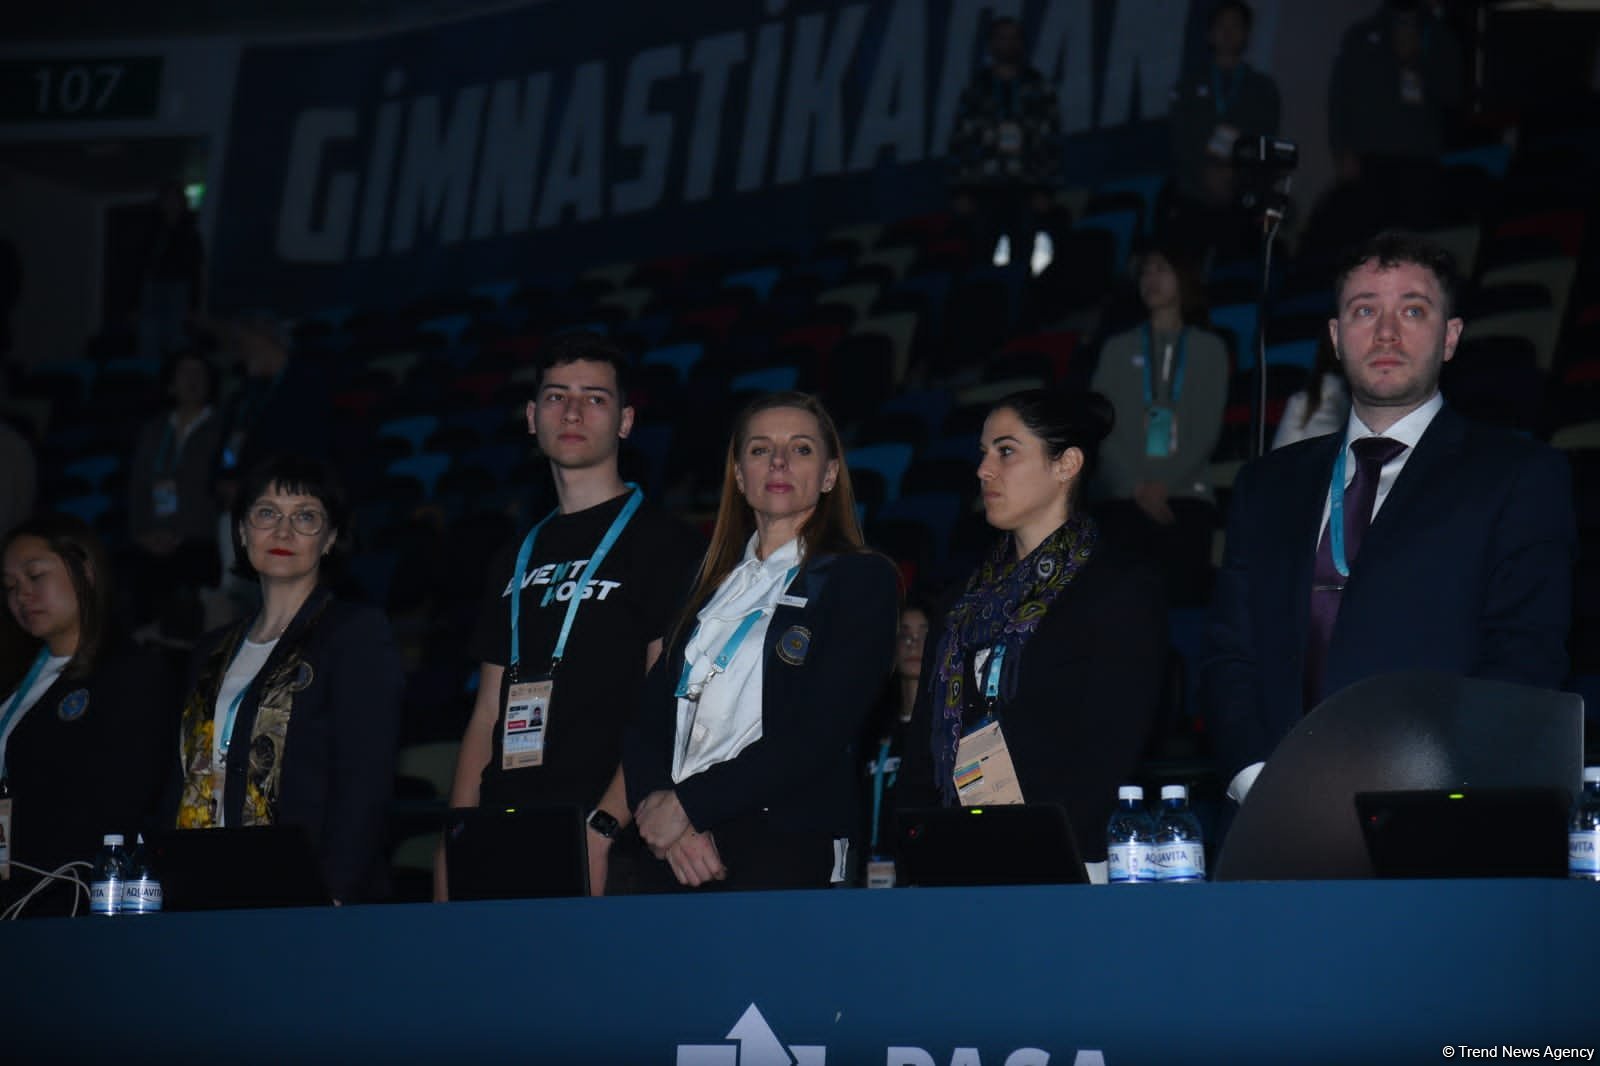 Azerbaijan's Baku opens FIG Artistic Gymnastics World Cup (PHOTO)